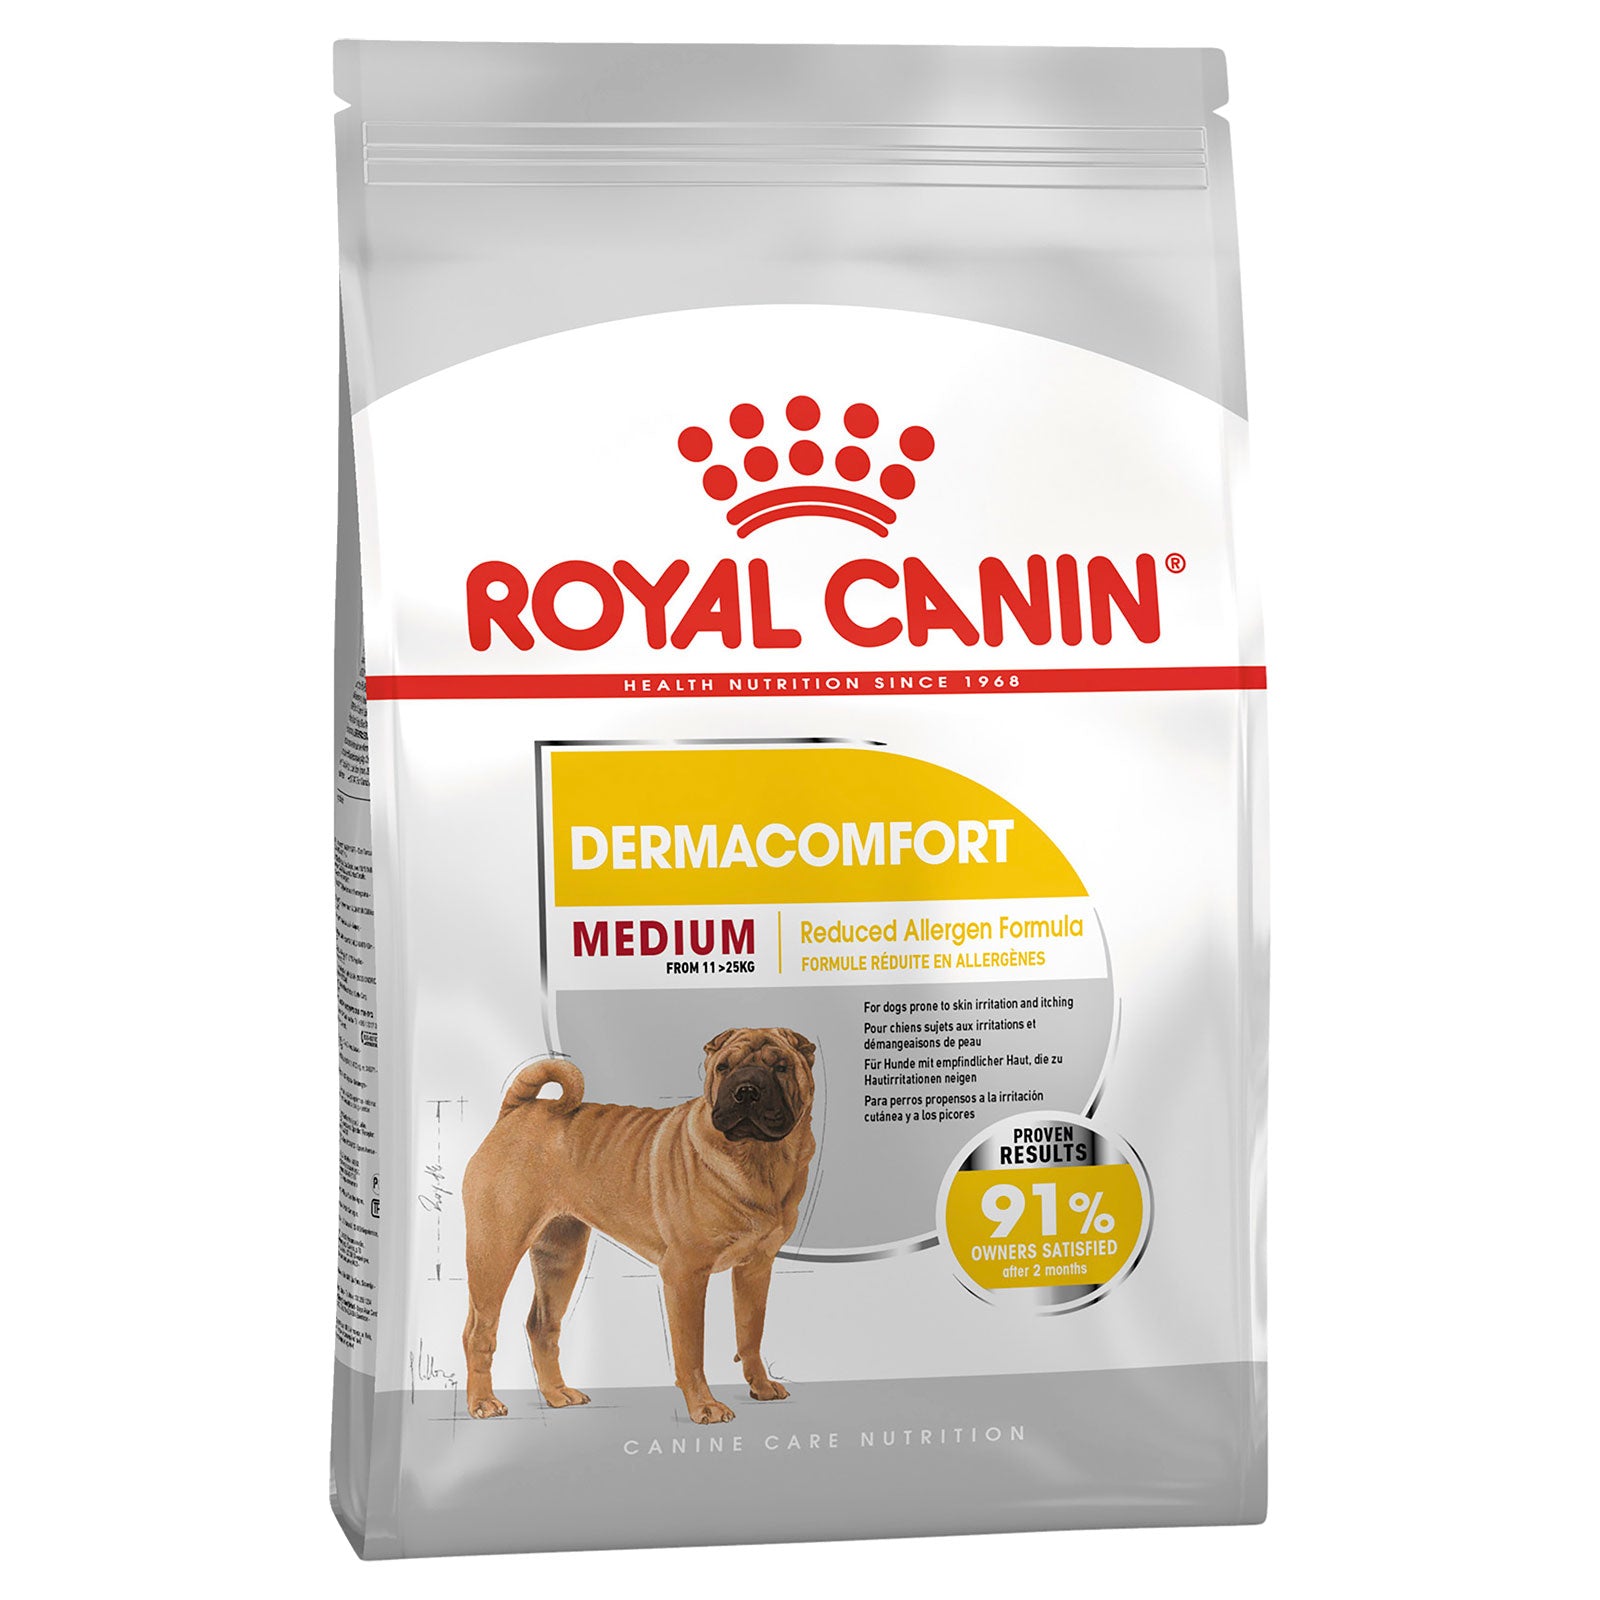 Royal Canin Dog Food Dermacomfort Medium